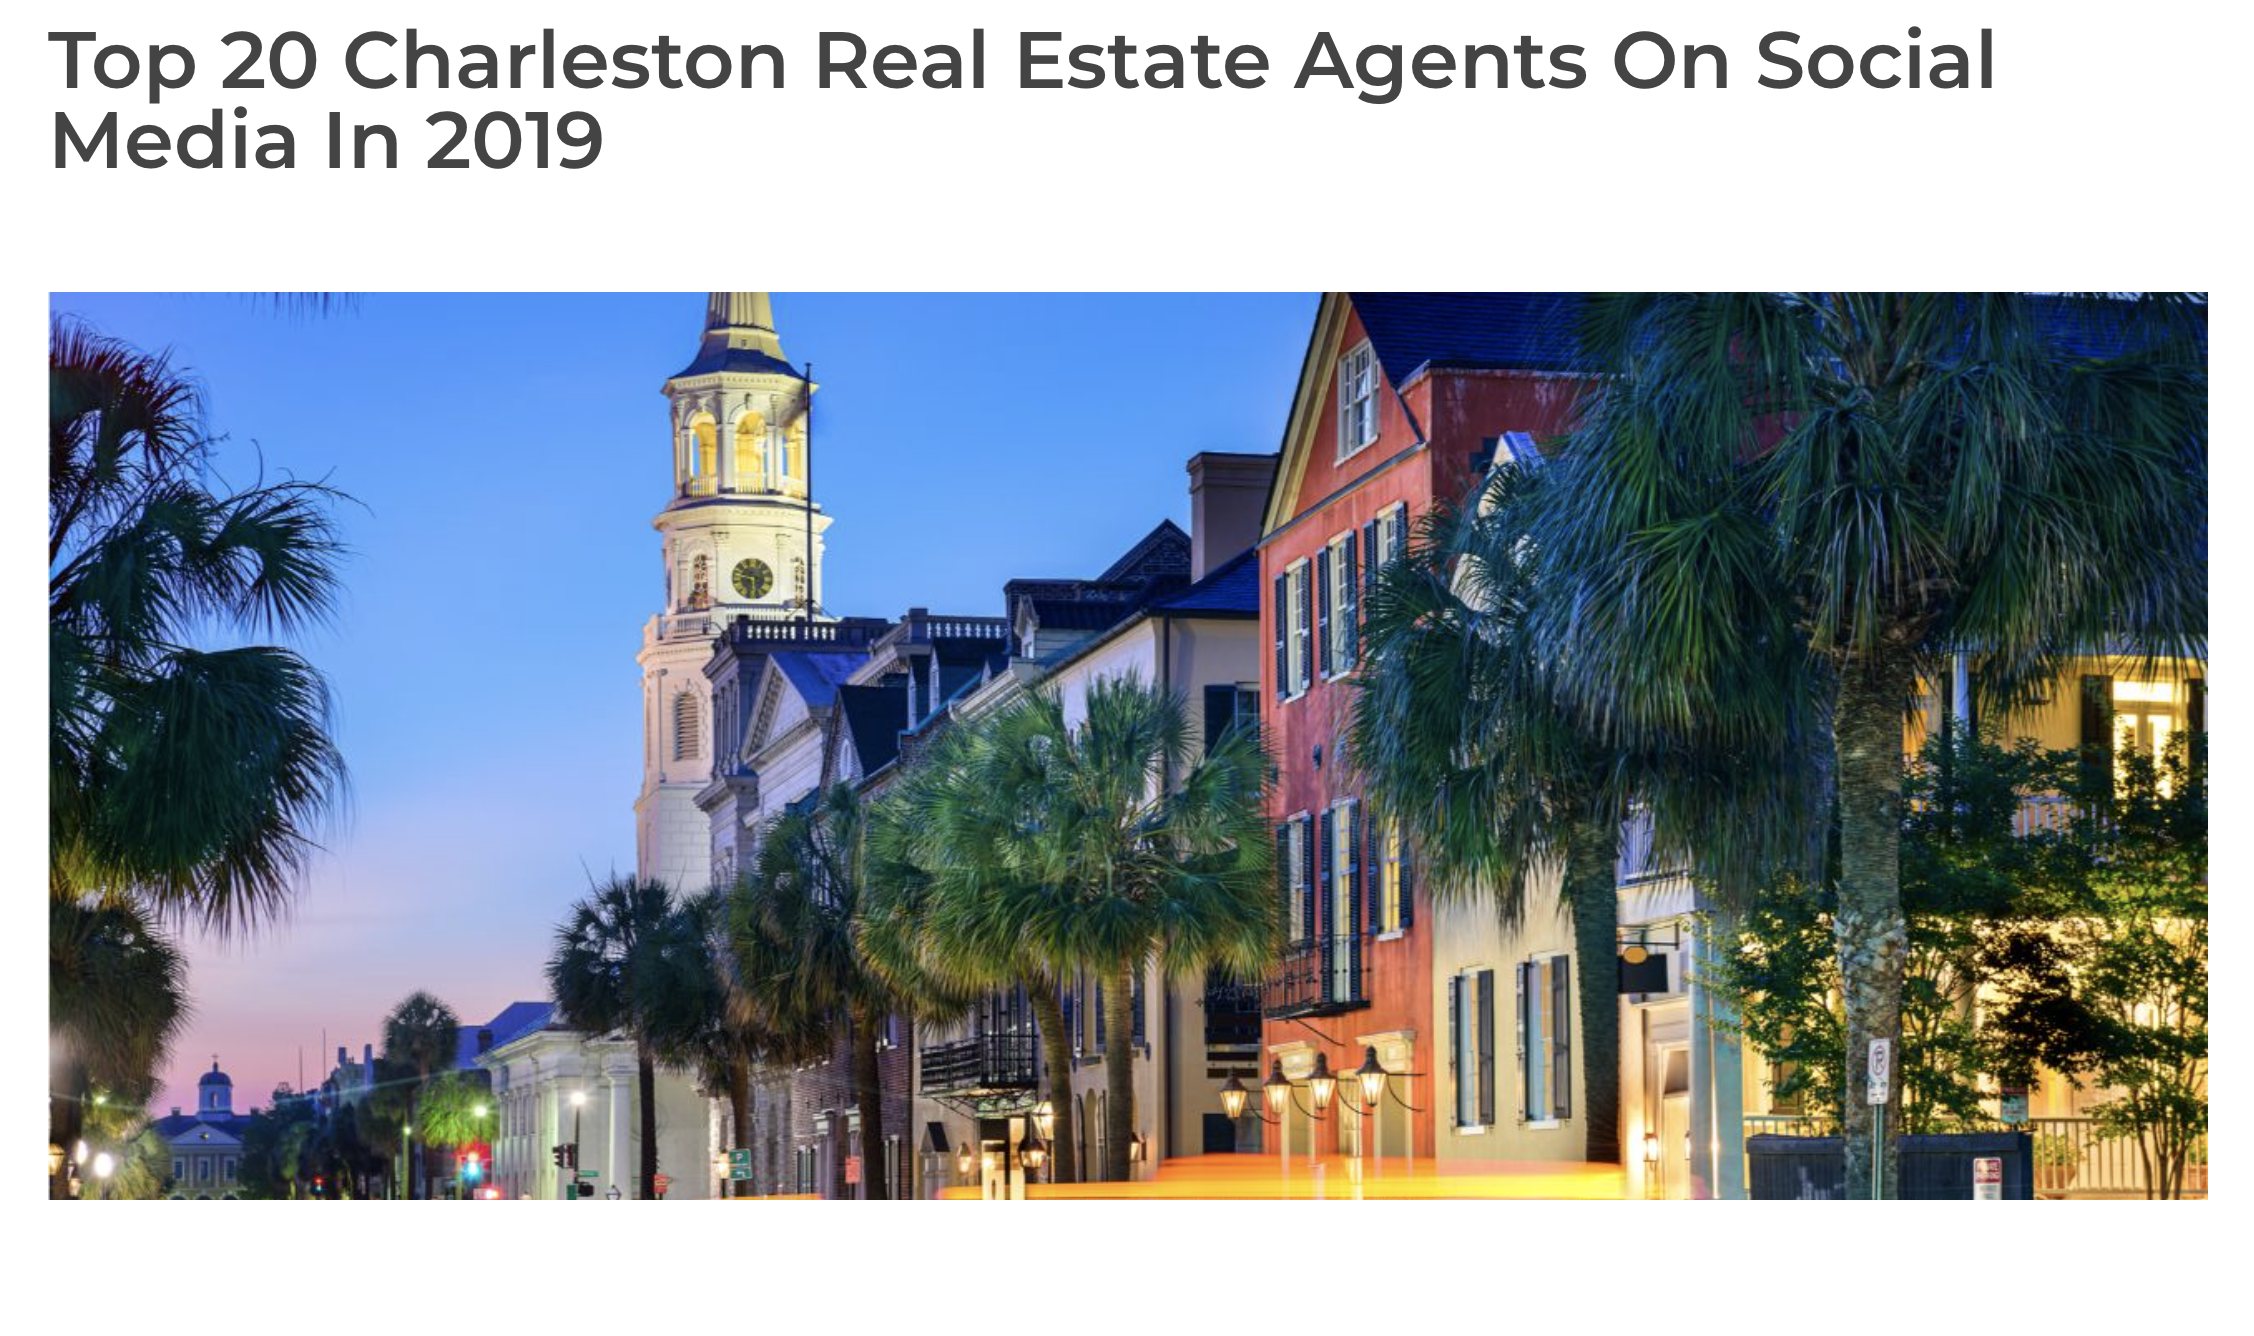 Top 20 Charleston Real Estate Agents on Social Media 2019!